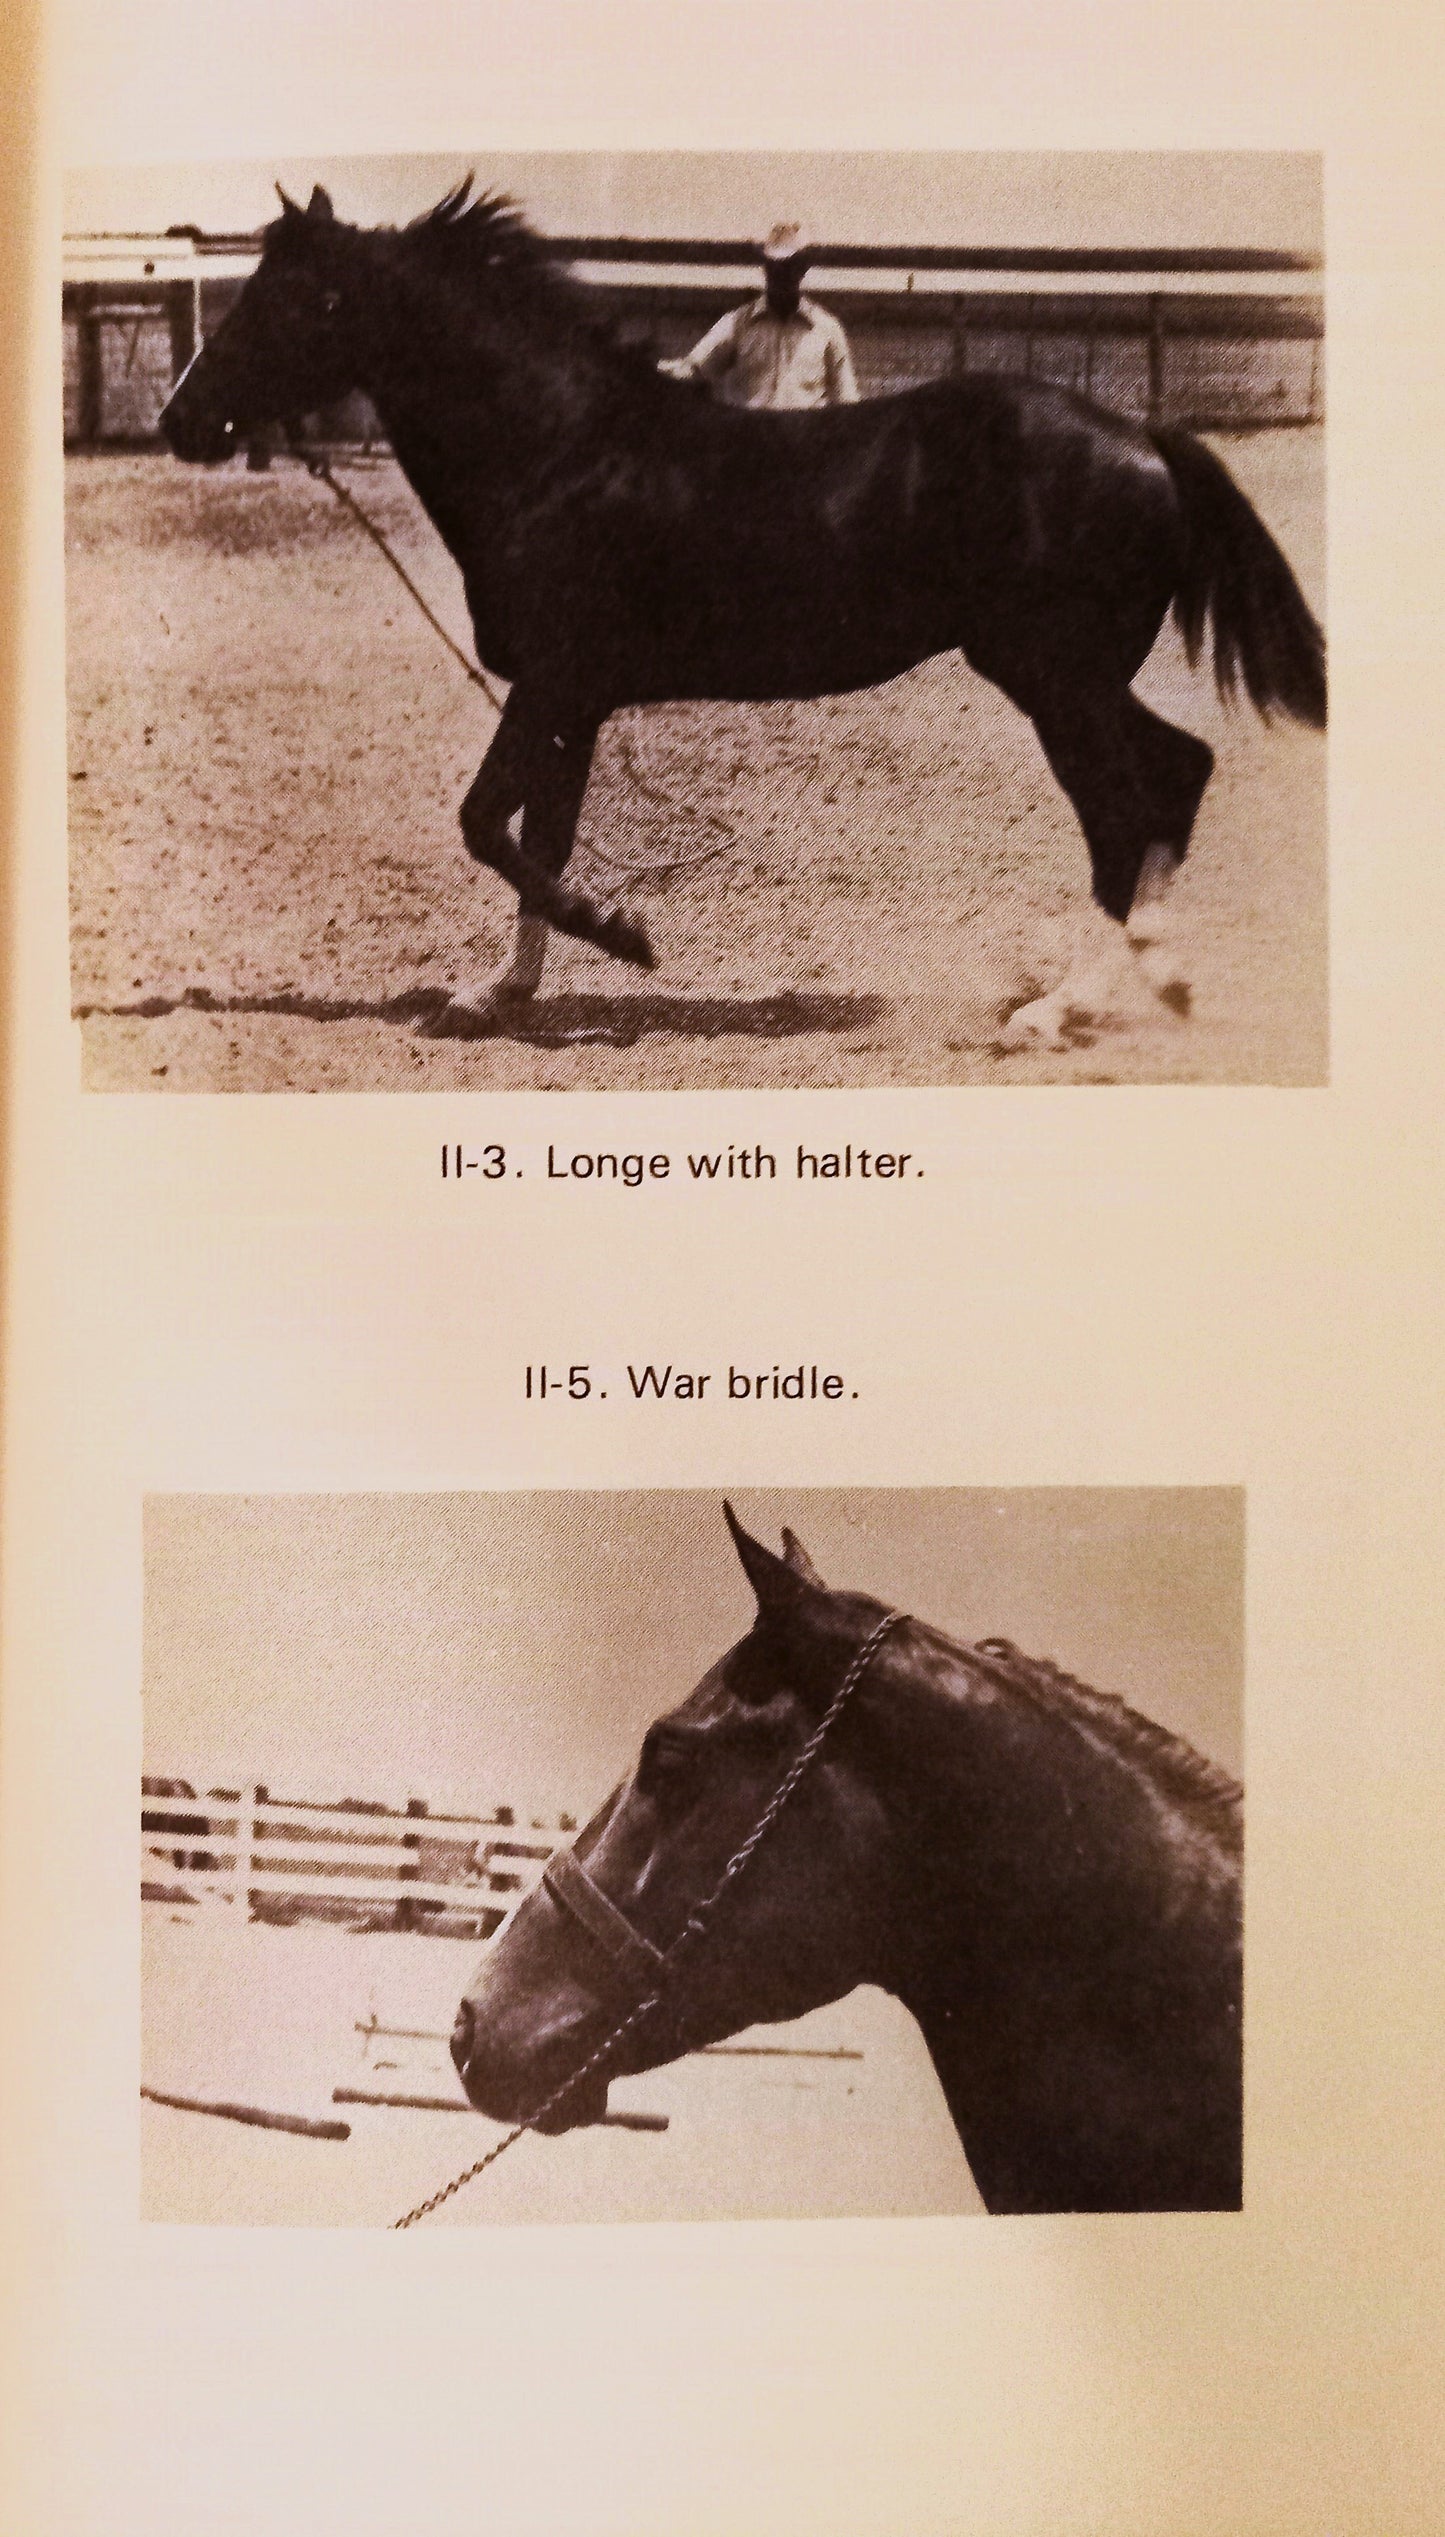 Western Equitation, Horsemanship and Showmanship (*Signed Copy*)